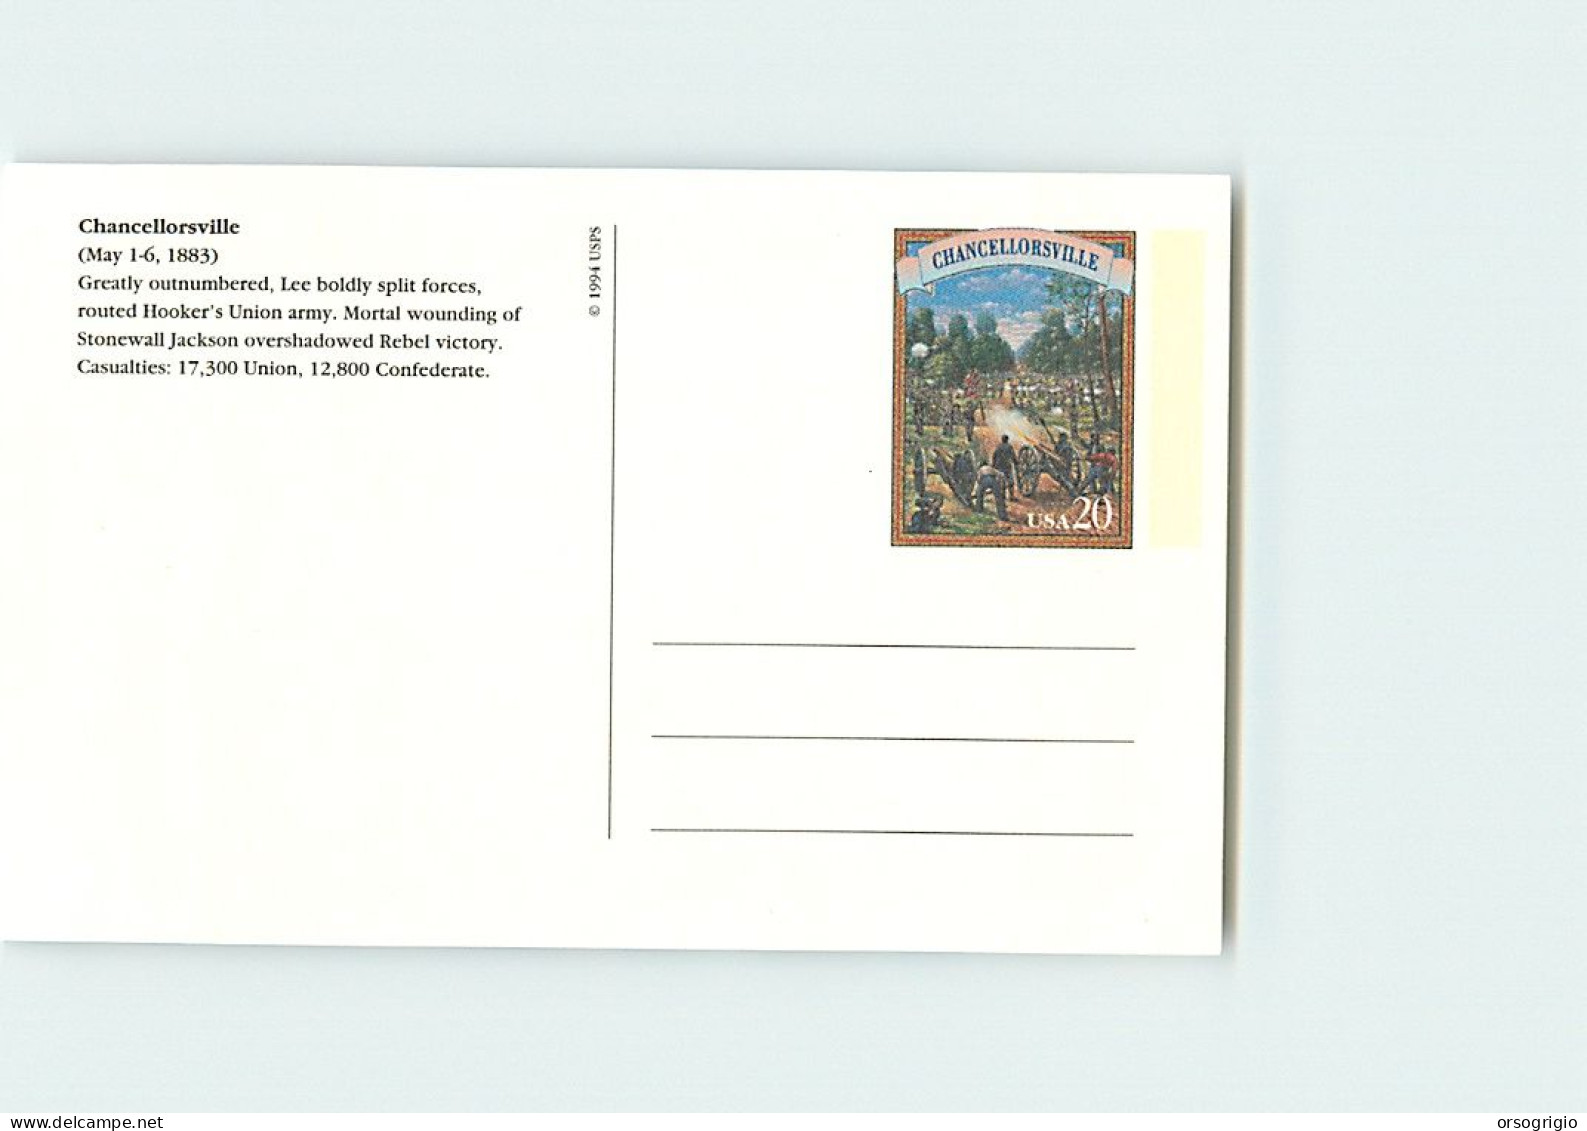 USA - cartolina intero postale - INDIPENDENZA STATI UNITI D'AMERICA -  N° 20 cards